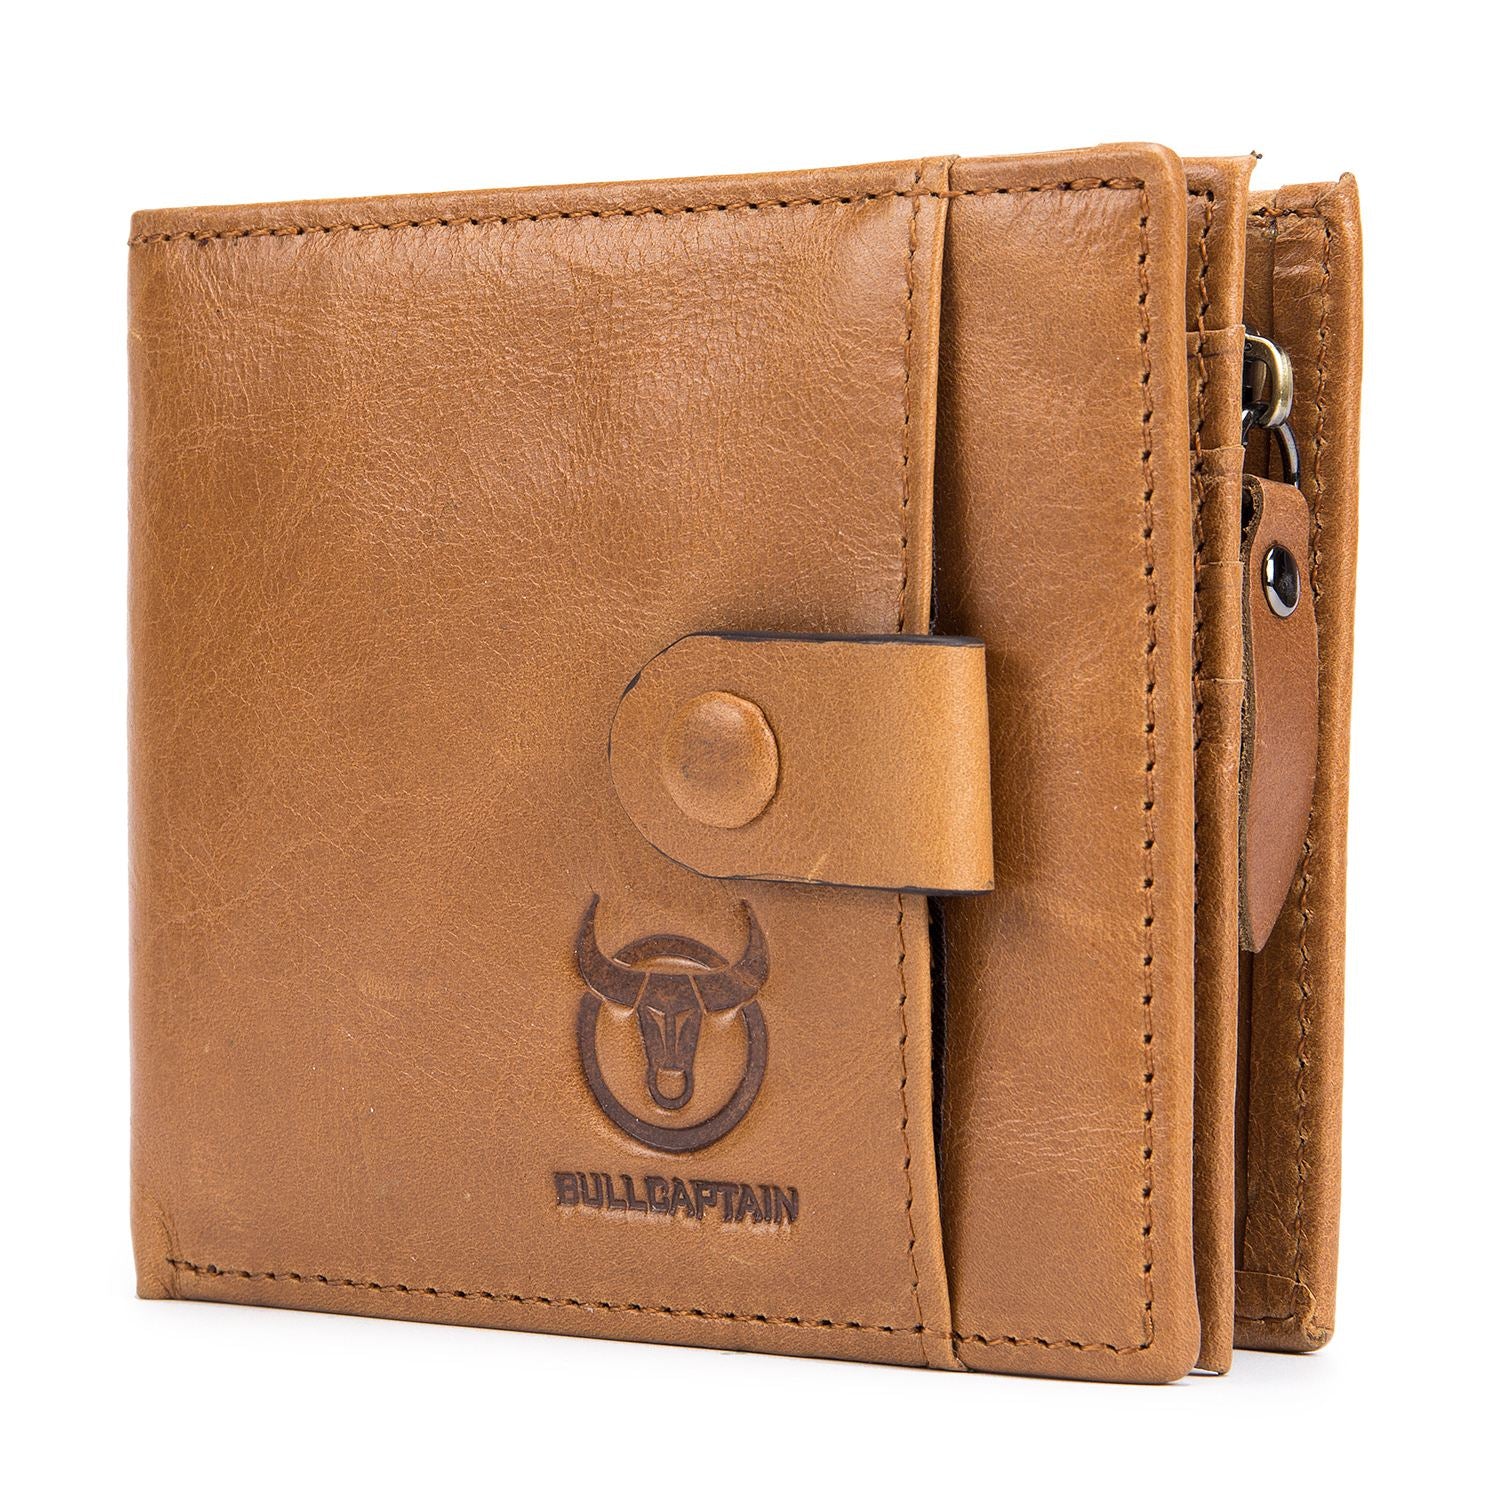 BULLCAPTAIN Genuine Leather Men Wallets Credit Business Card Holders Zipper Cowhide Leather Wallet Purse - ebowsos